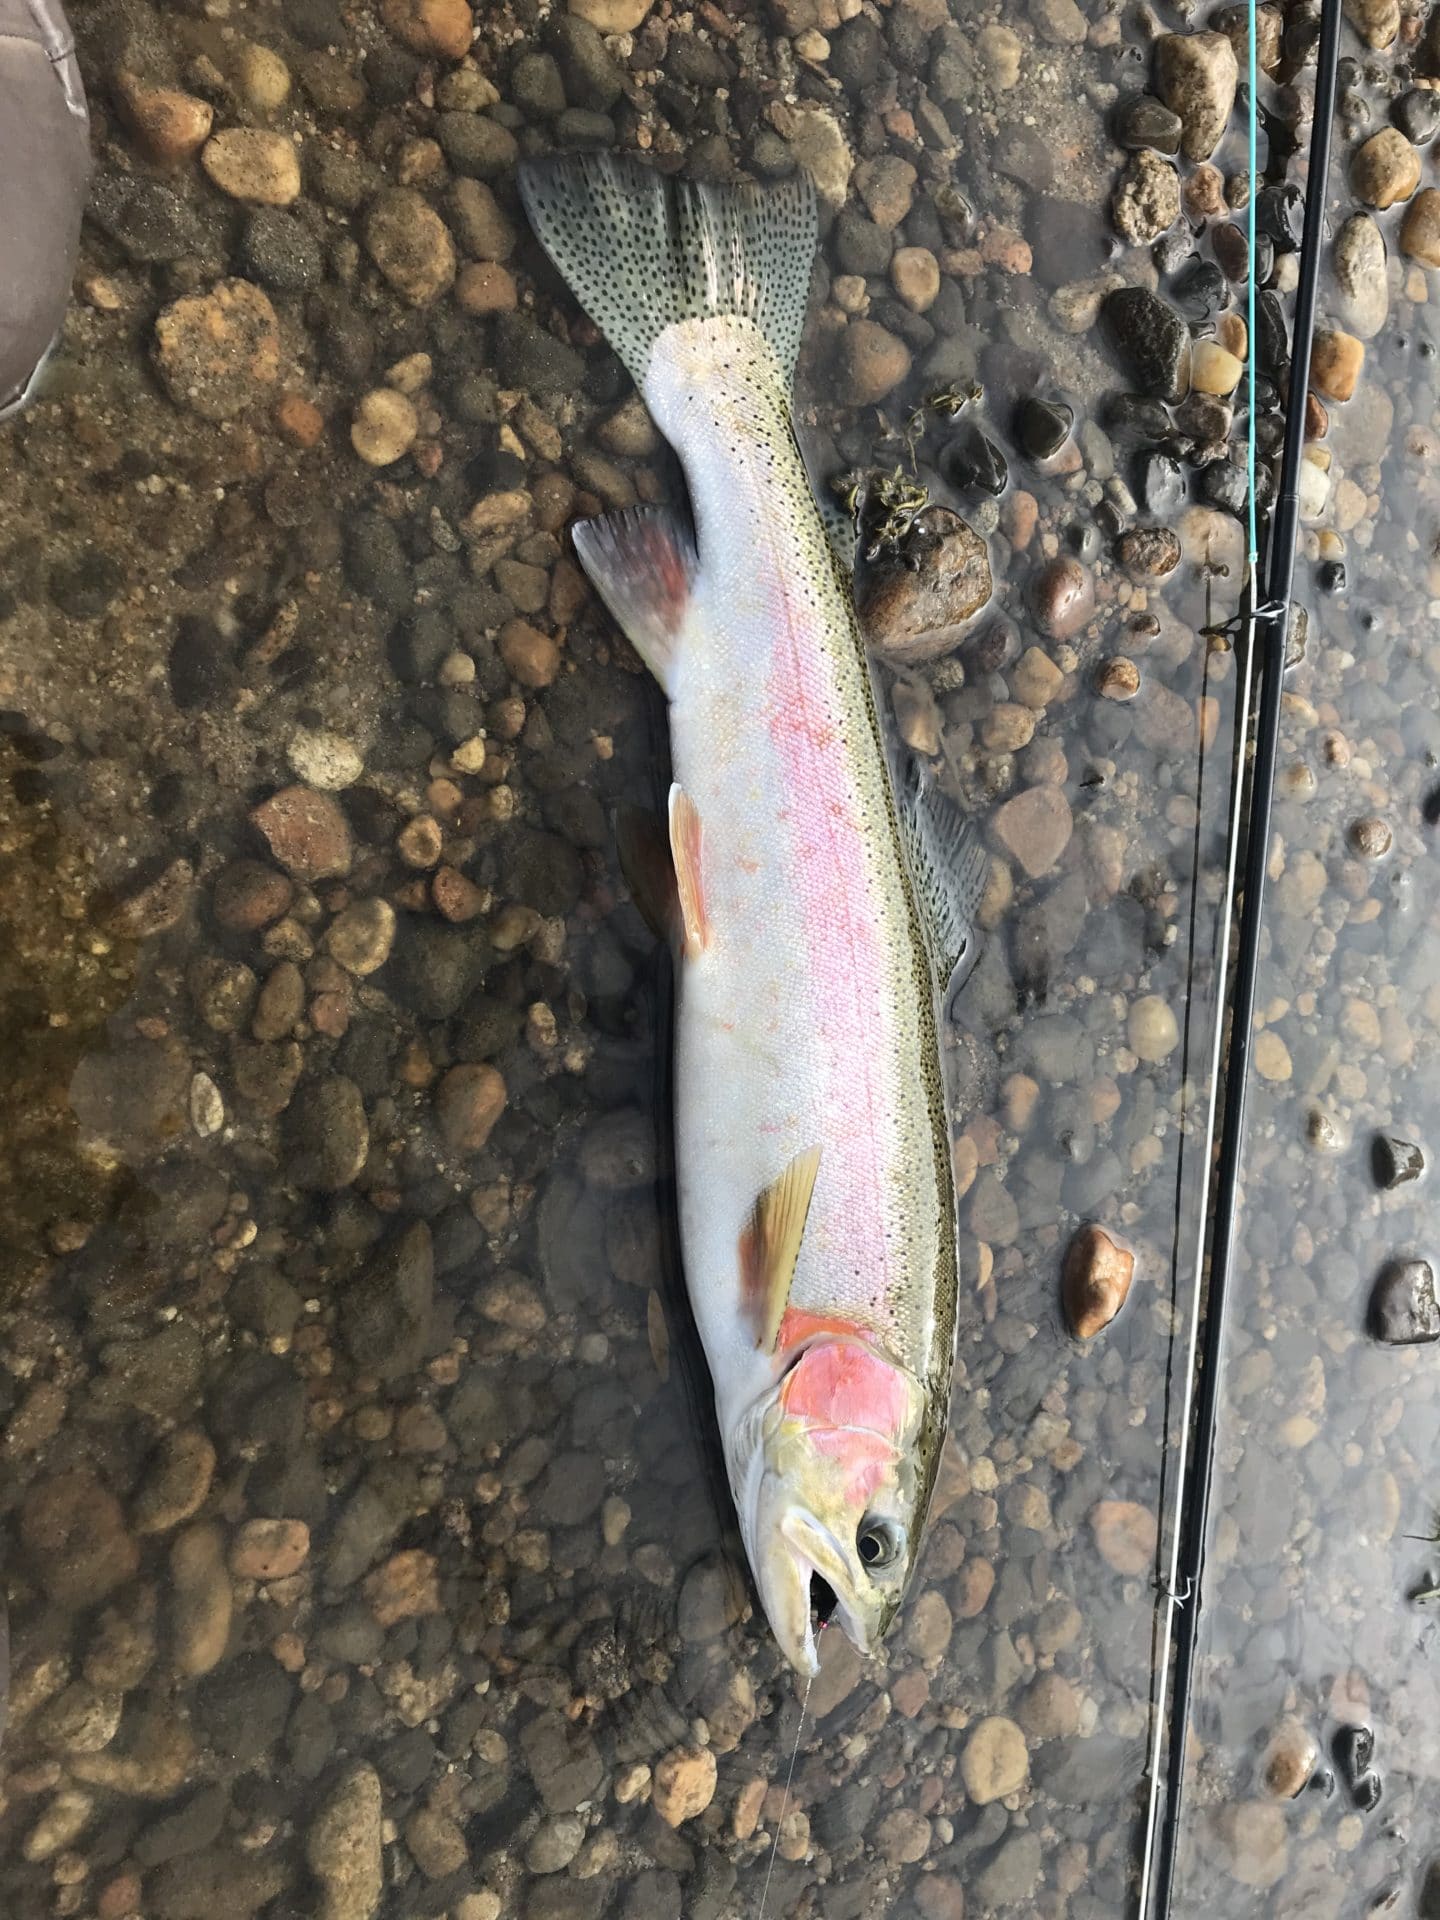 Idaho steelhead fishing on the Salmon River